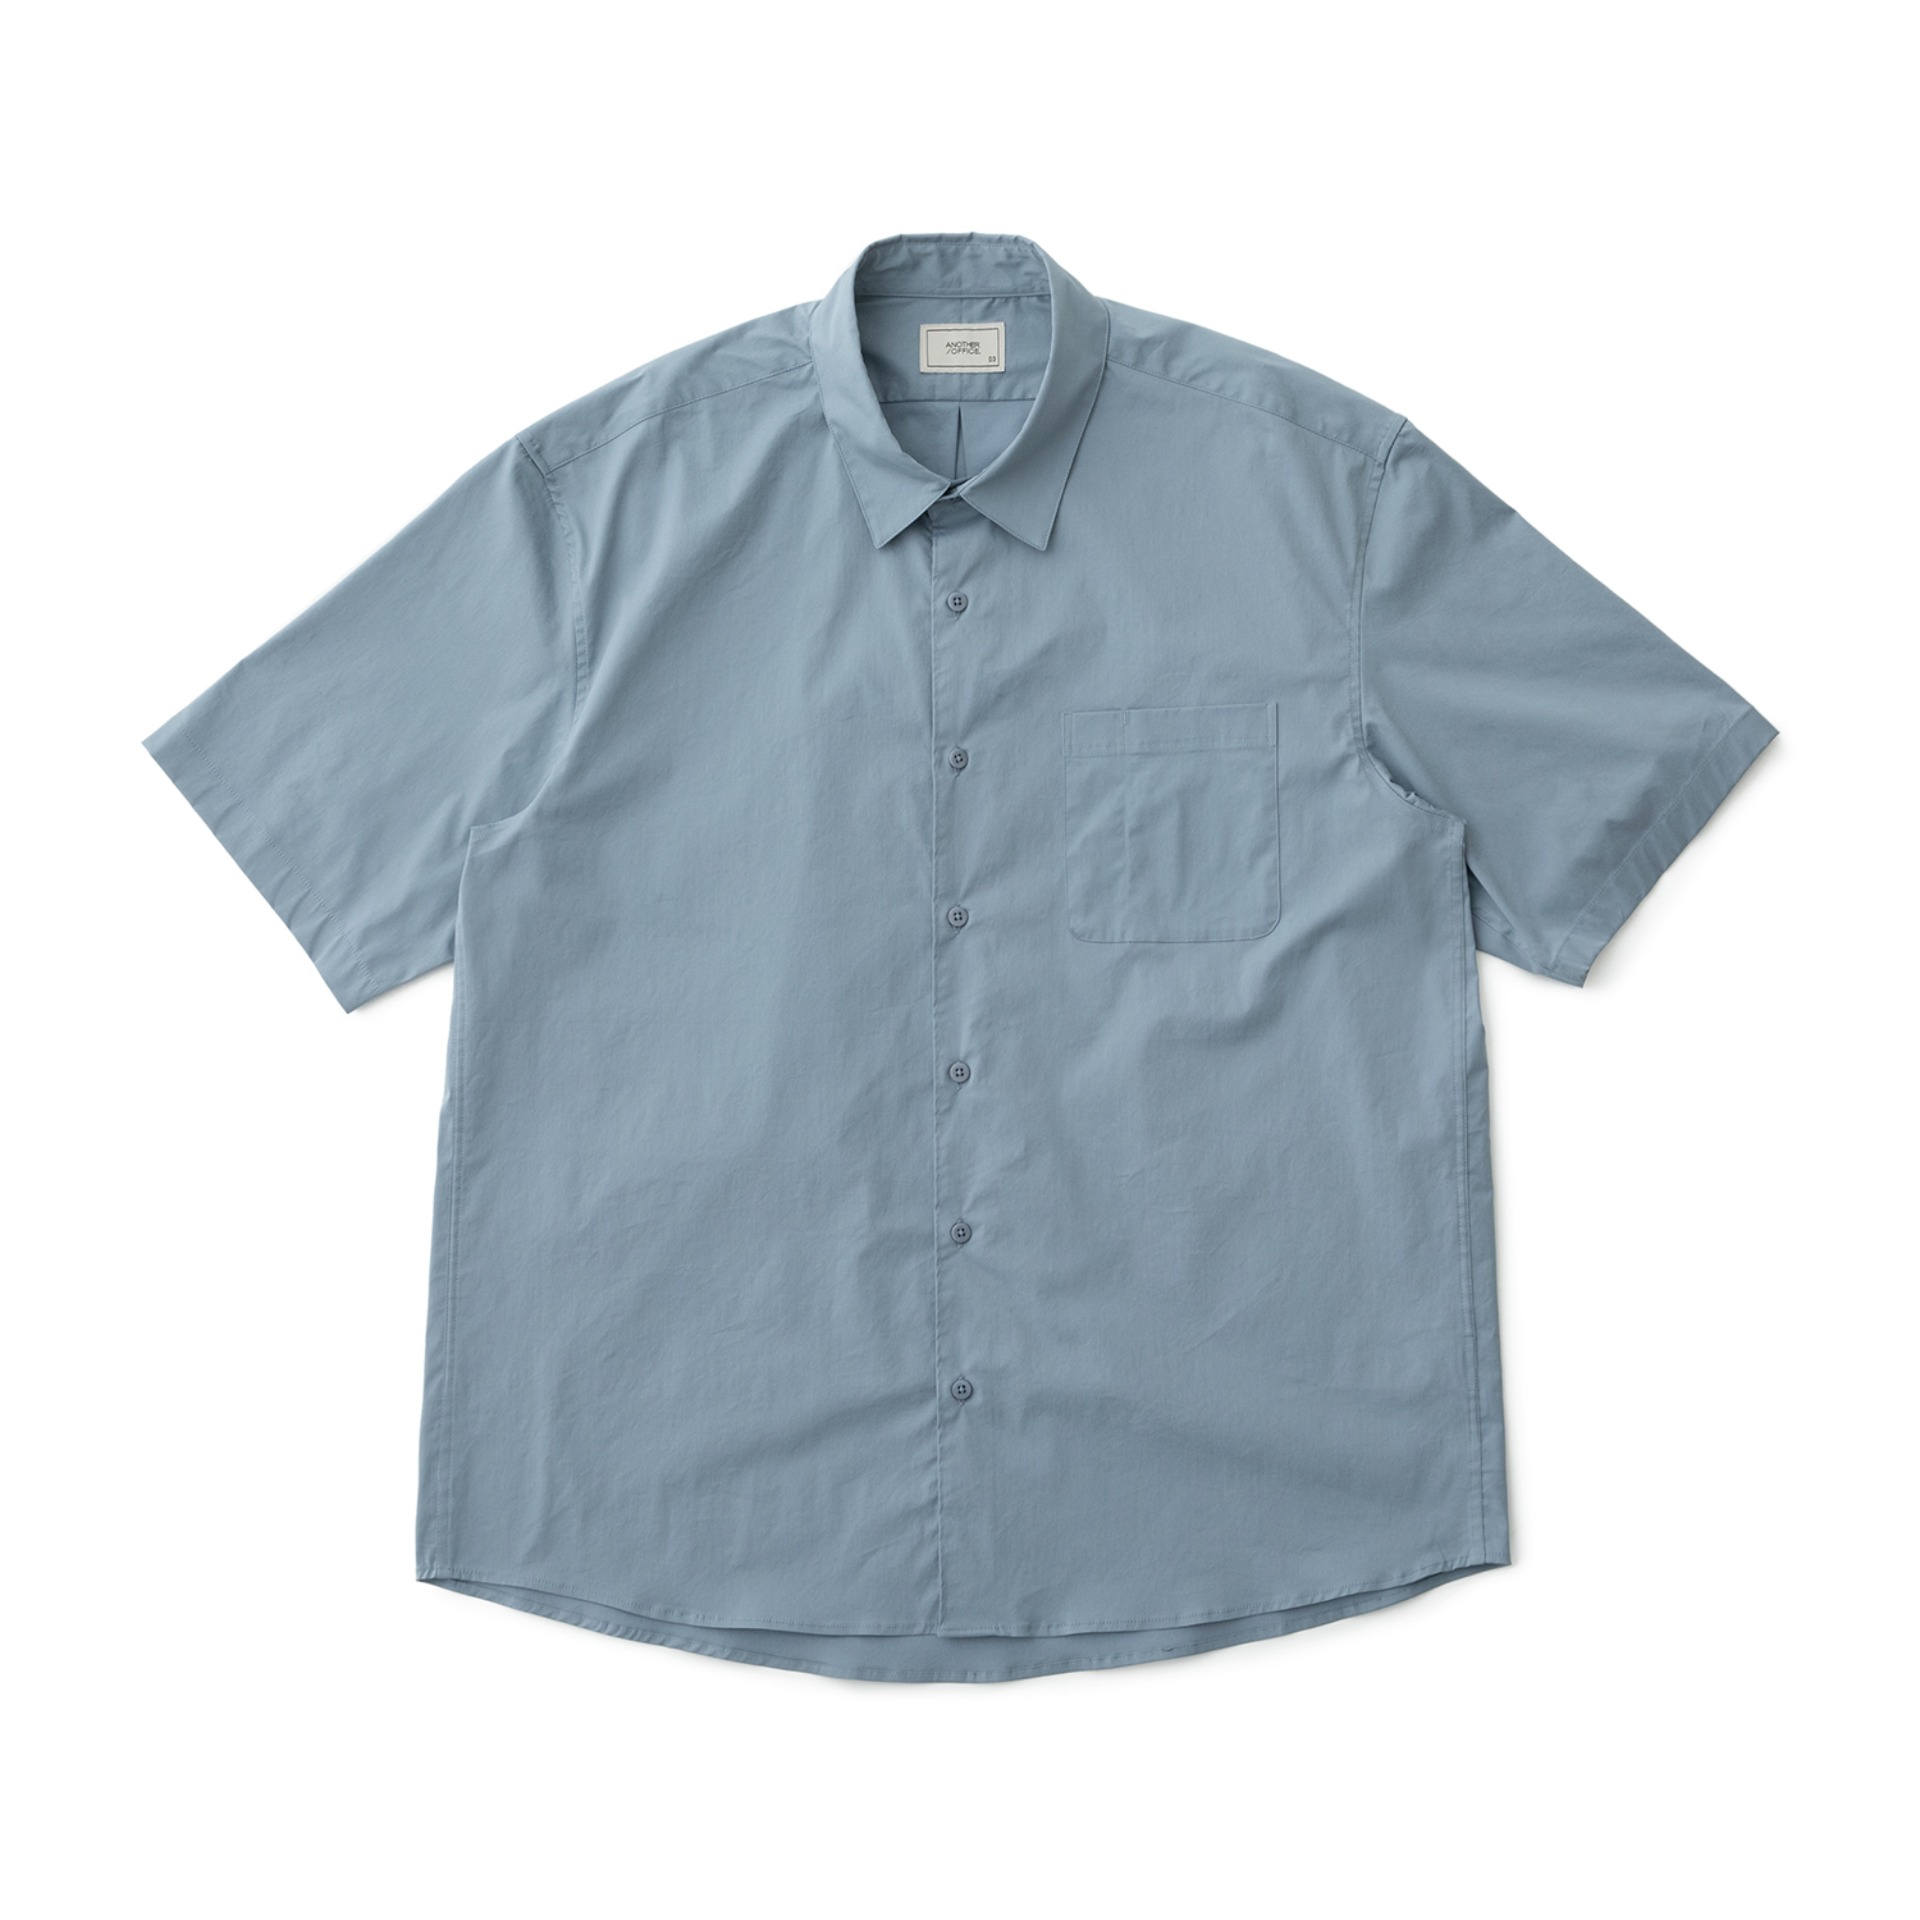 A/O 21SS Dailylife Shirt (Cadet Blue)